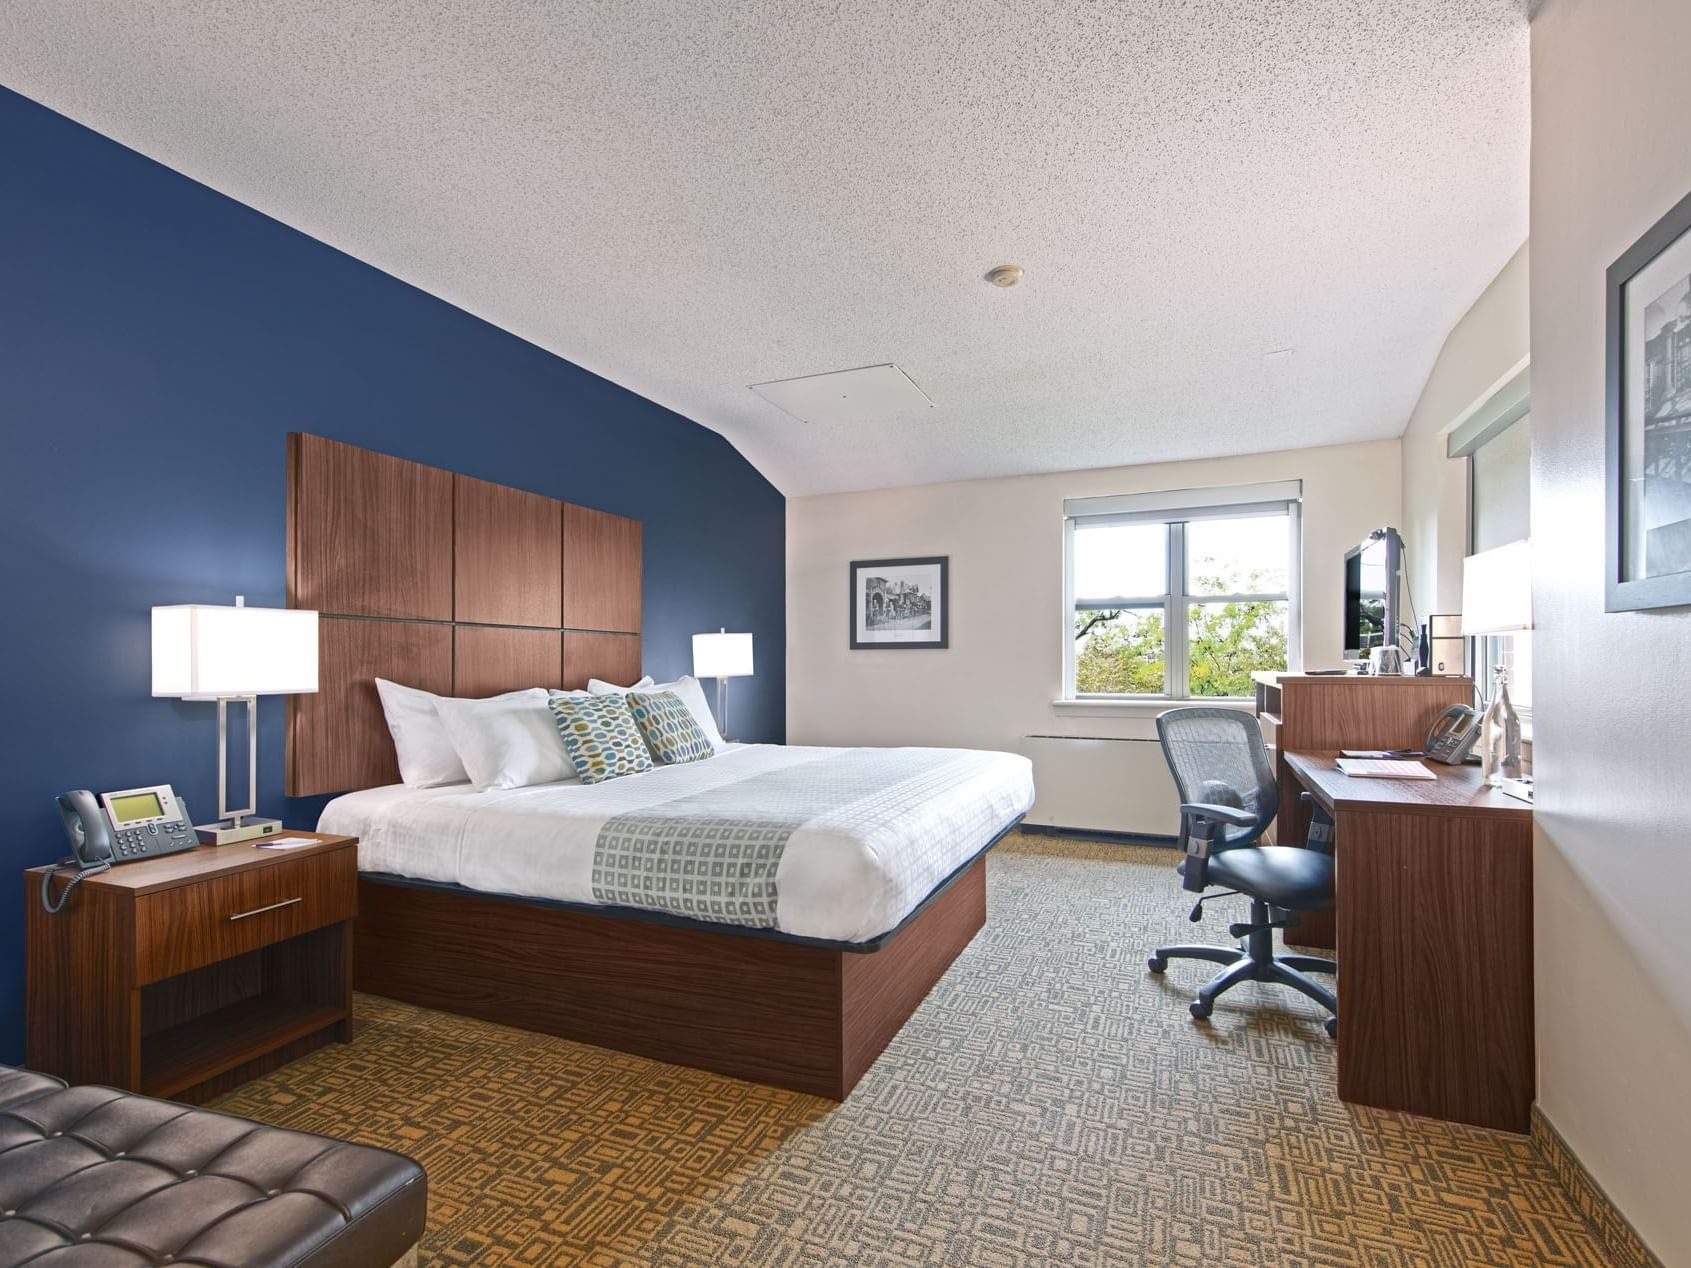 Bed & desk in Standard King room at Kellogg Conference Center